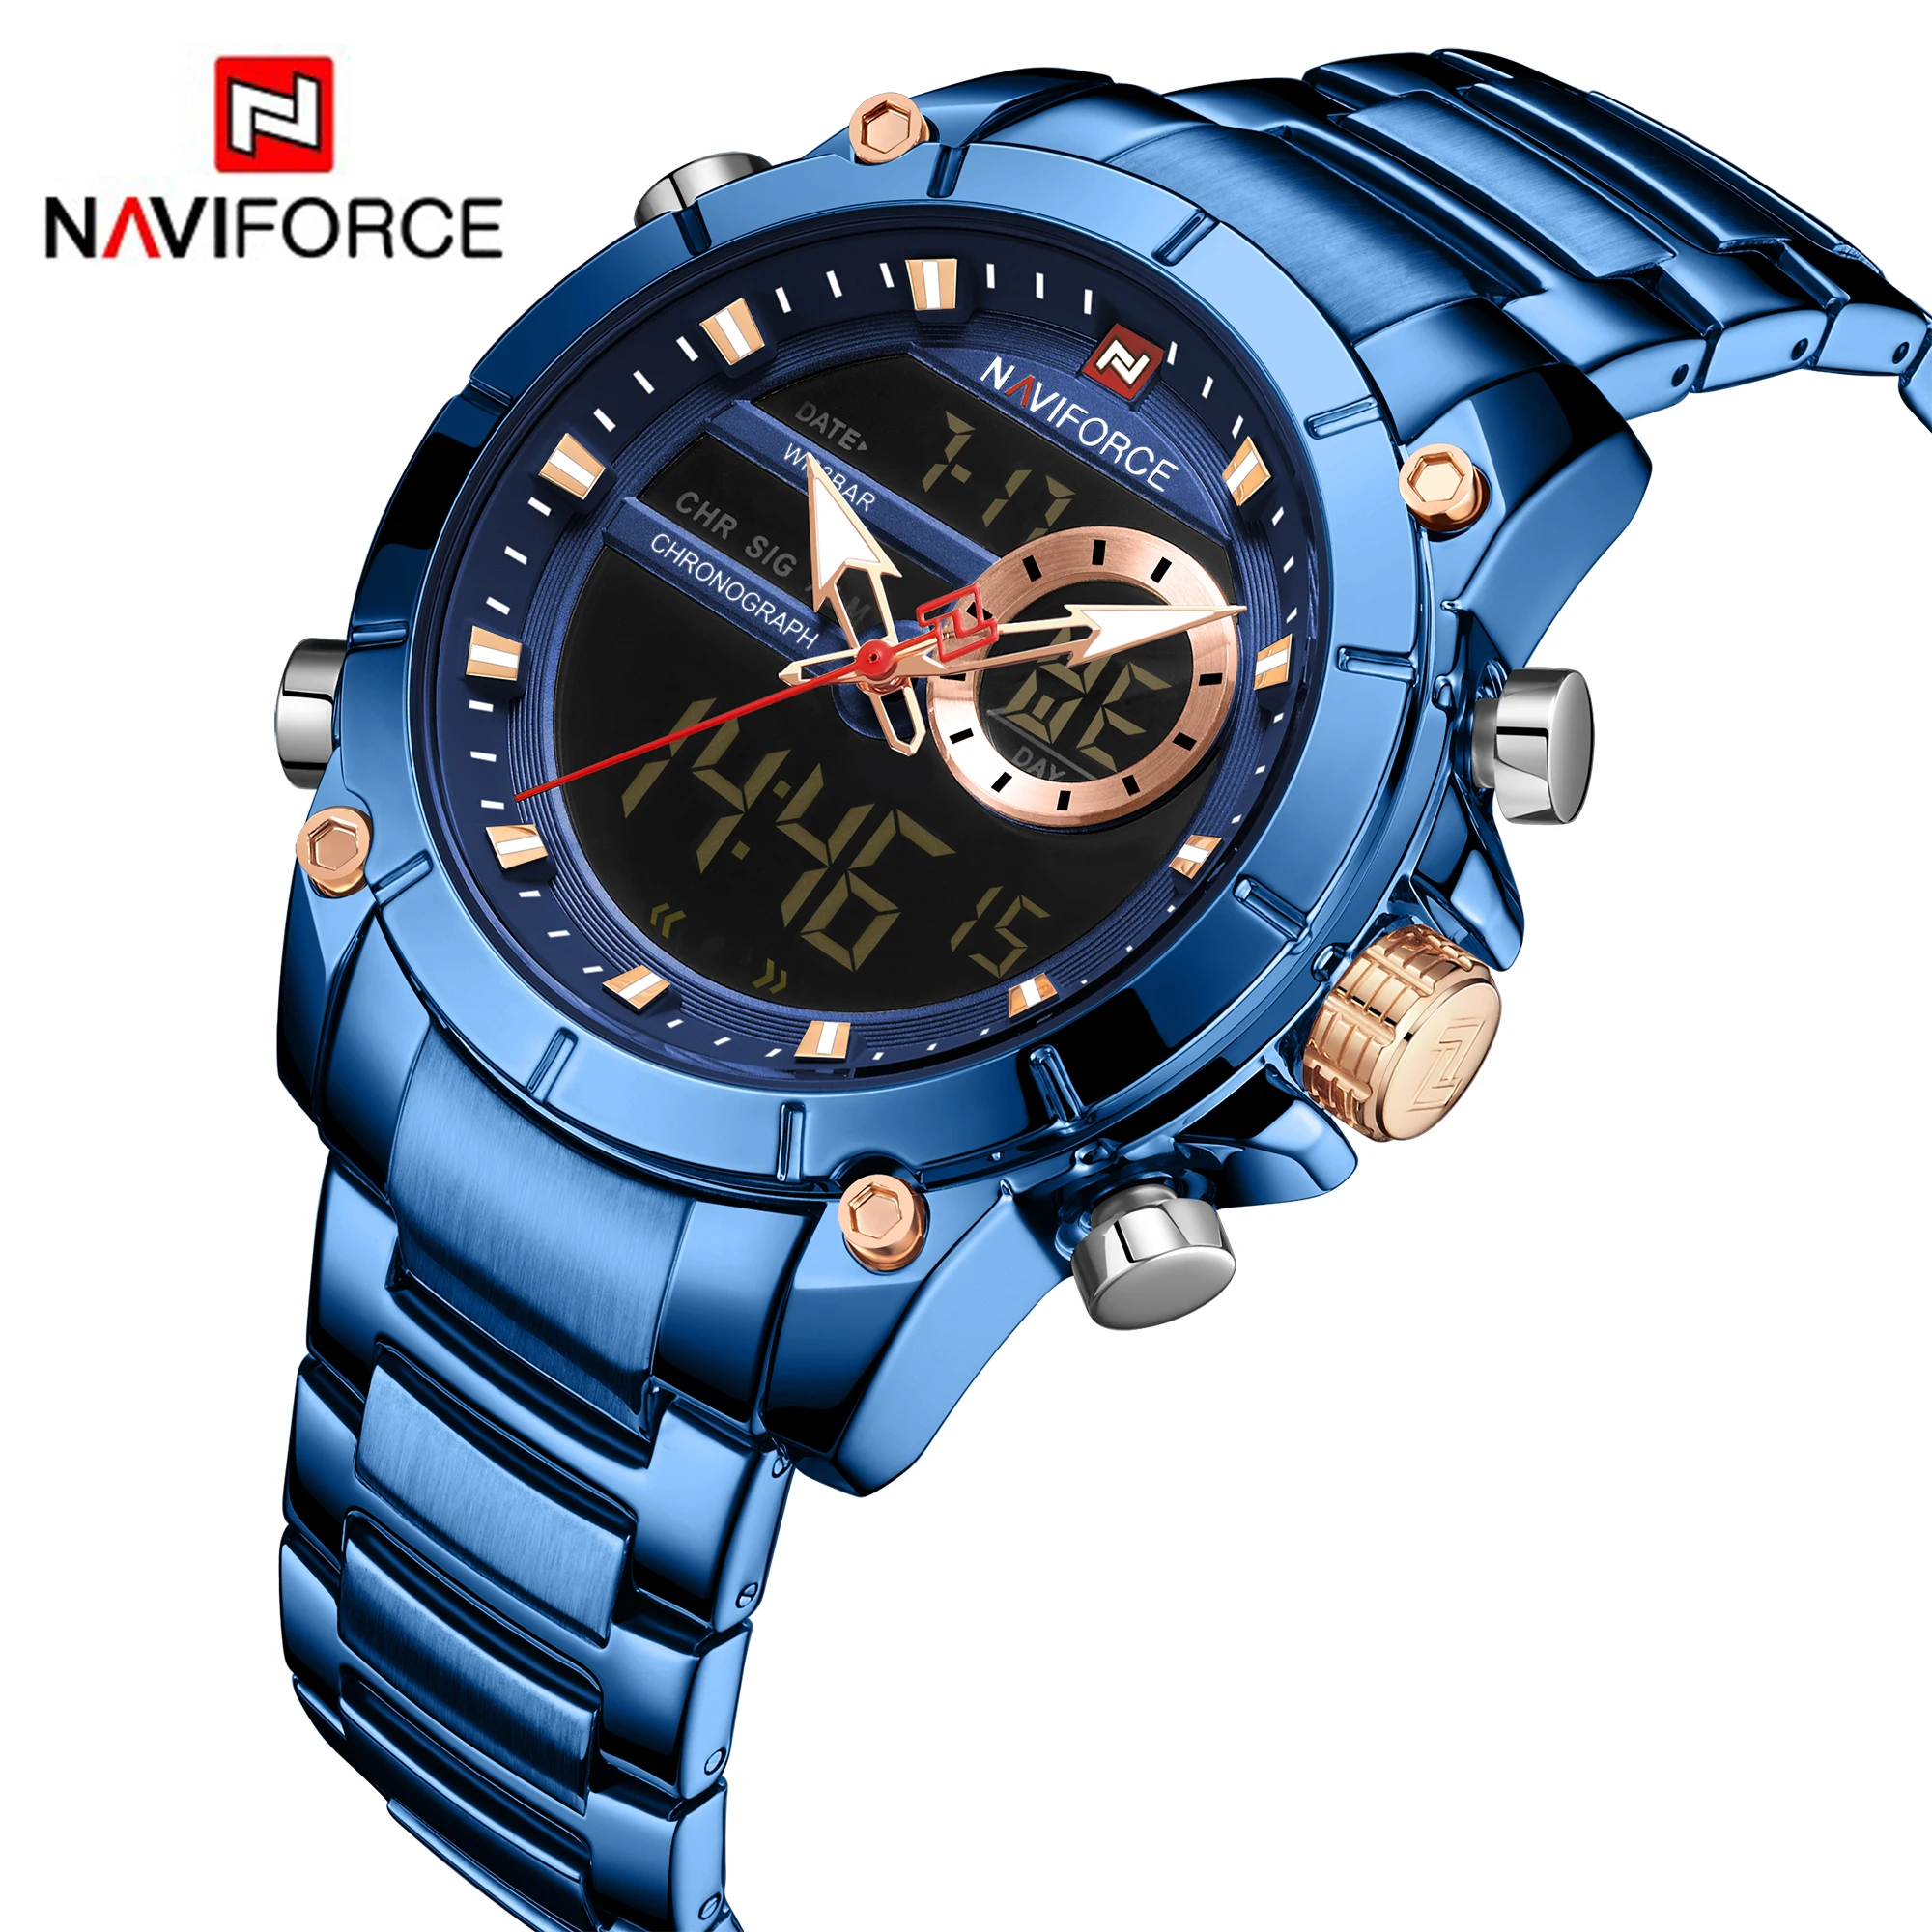 

NAVIFORCE 9163 Sport Men Watches Brand Quartz Wrist Watch For Man digital Clock neviforce reloj relojes hombre montre homme